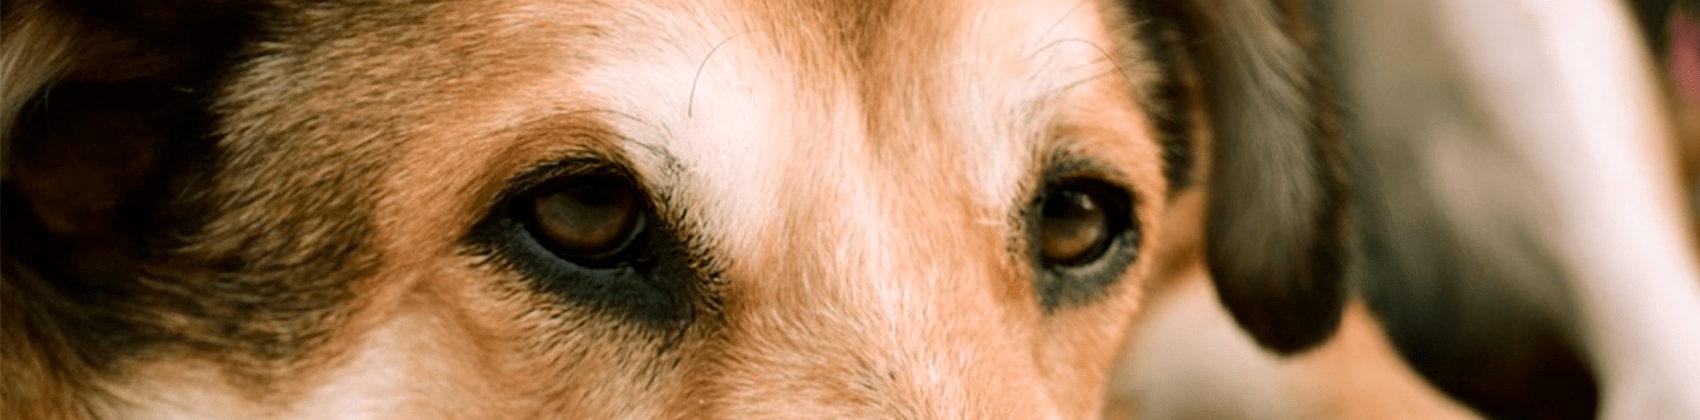 cachorro olho amarelo destaque destaque